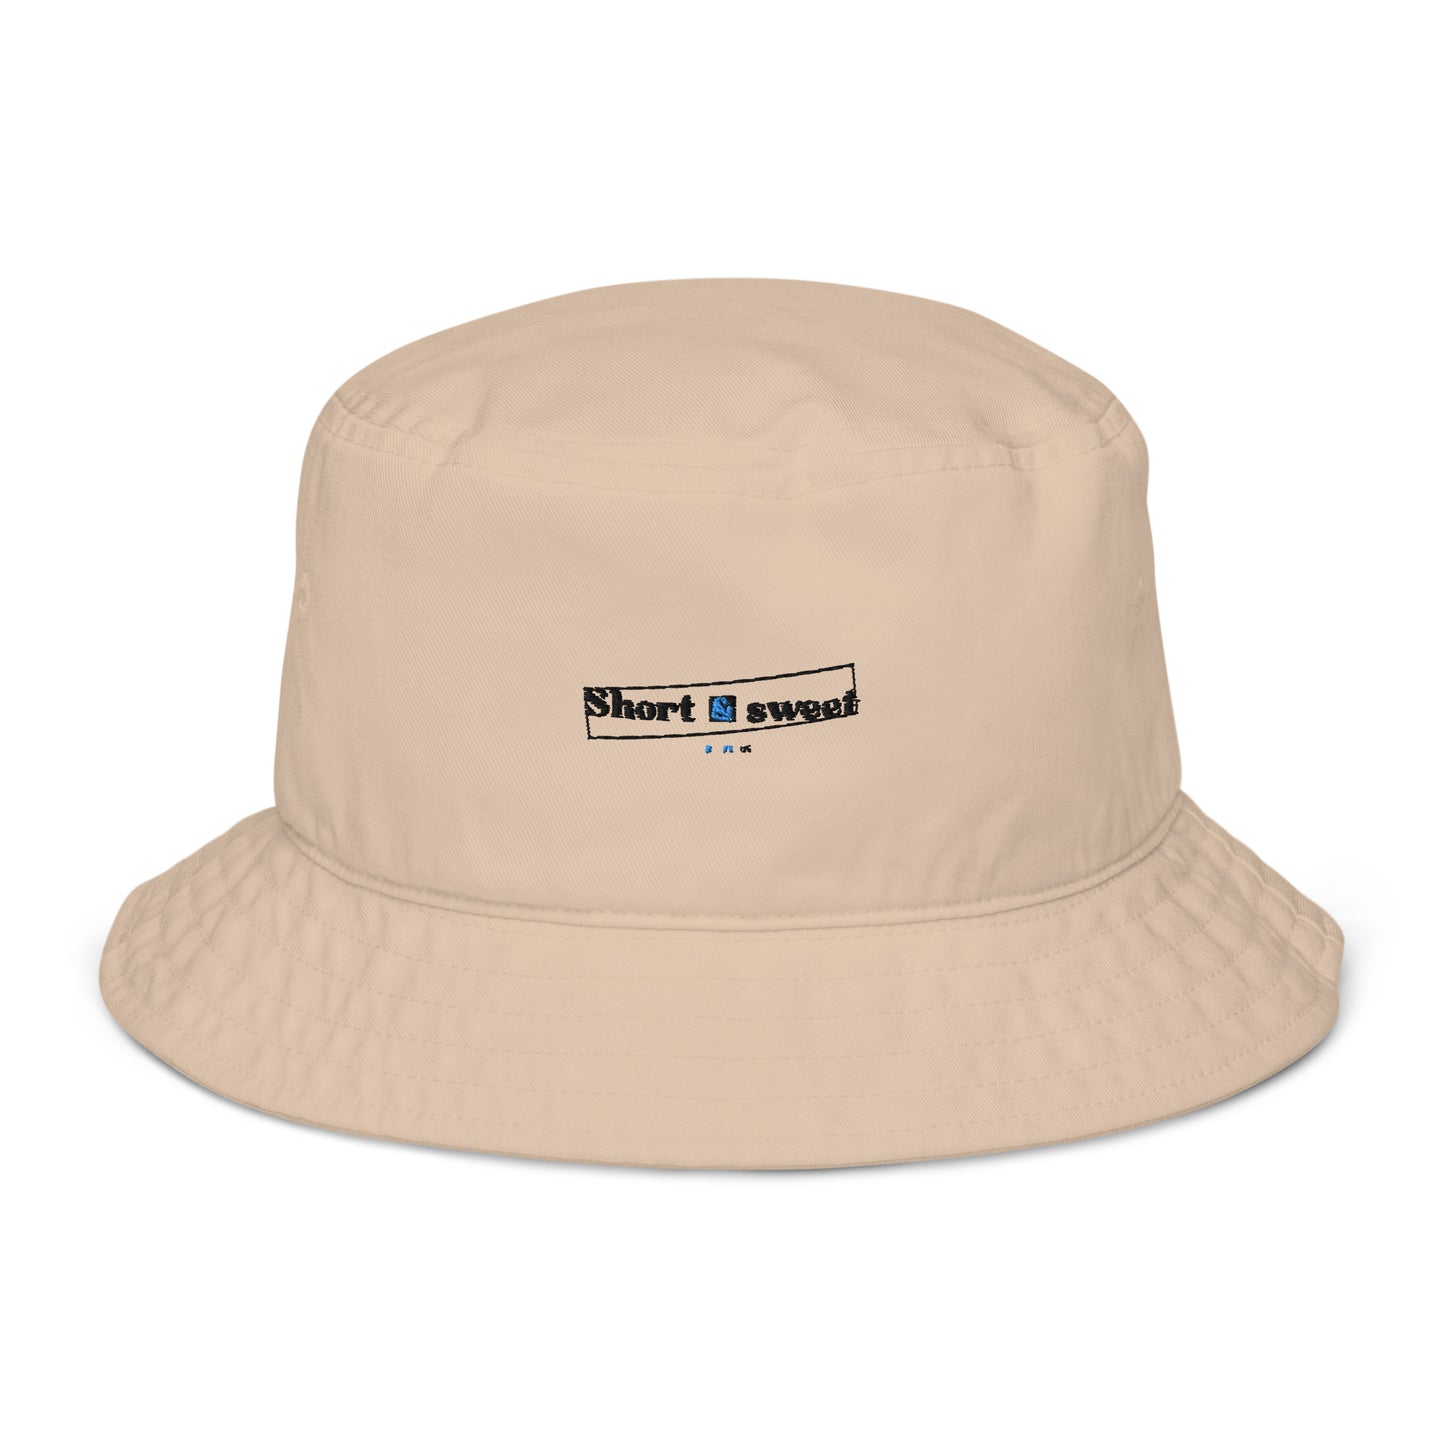 Organic bucket hat - Short & sweet